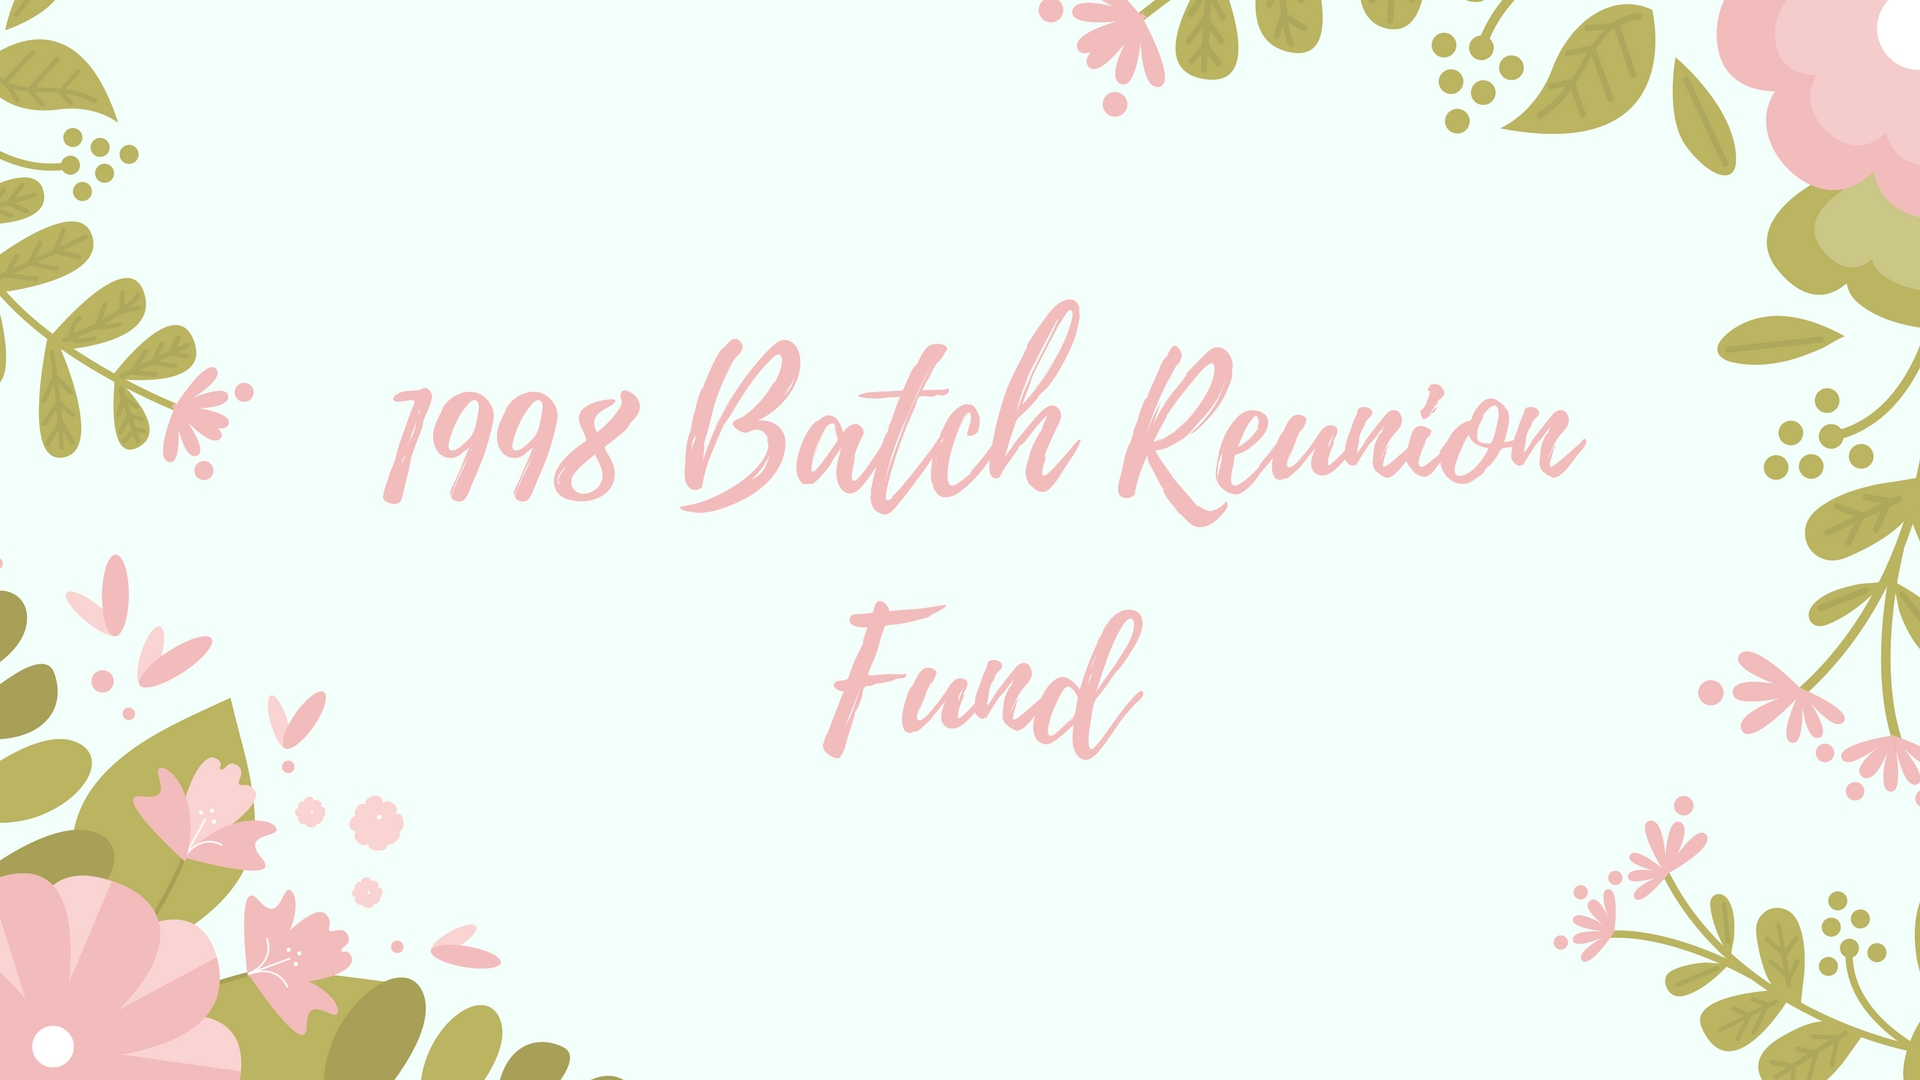 1998 Batch China Reunion Fund - NIRMAAN